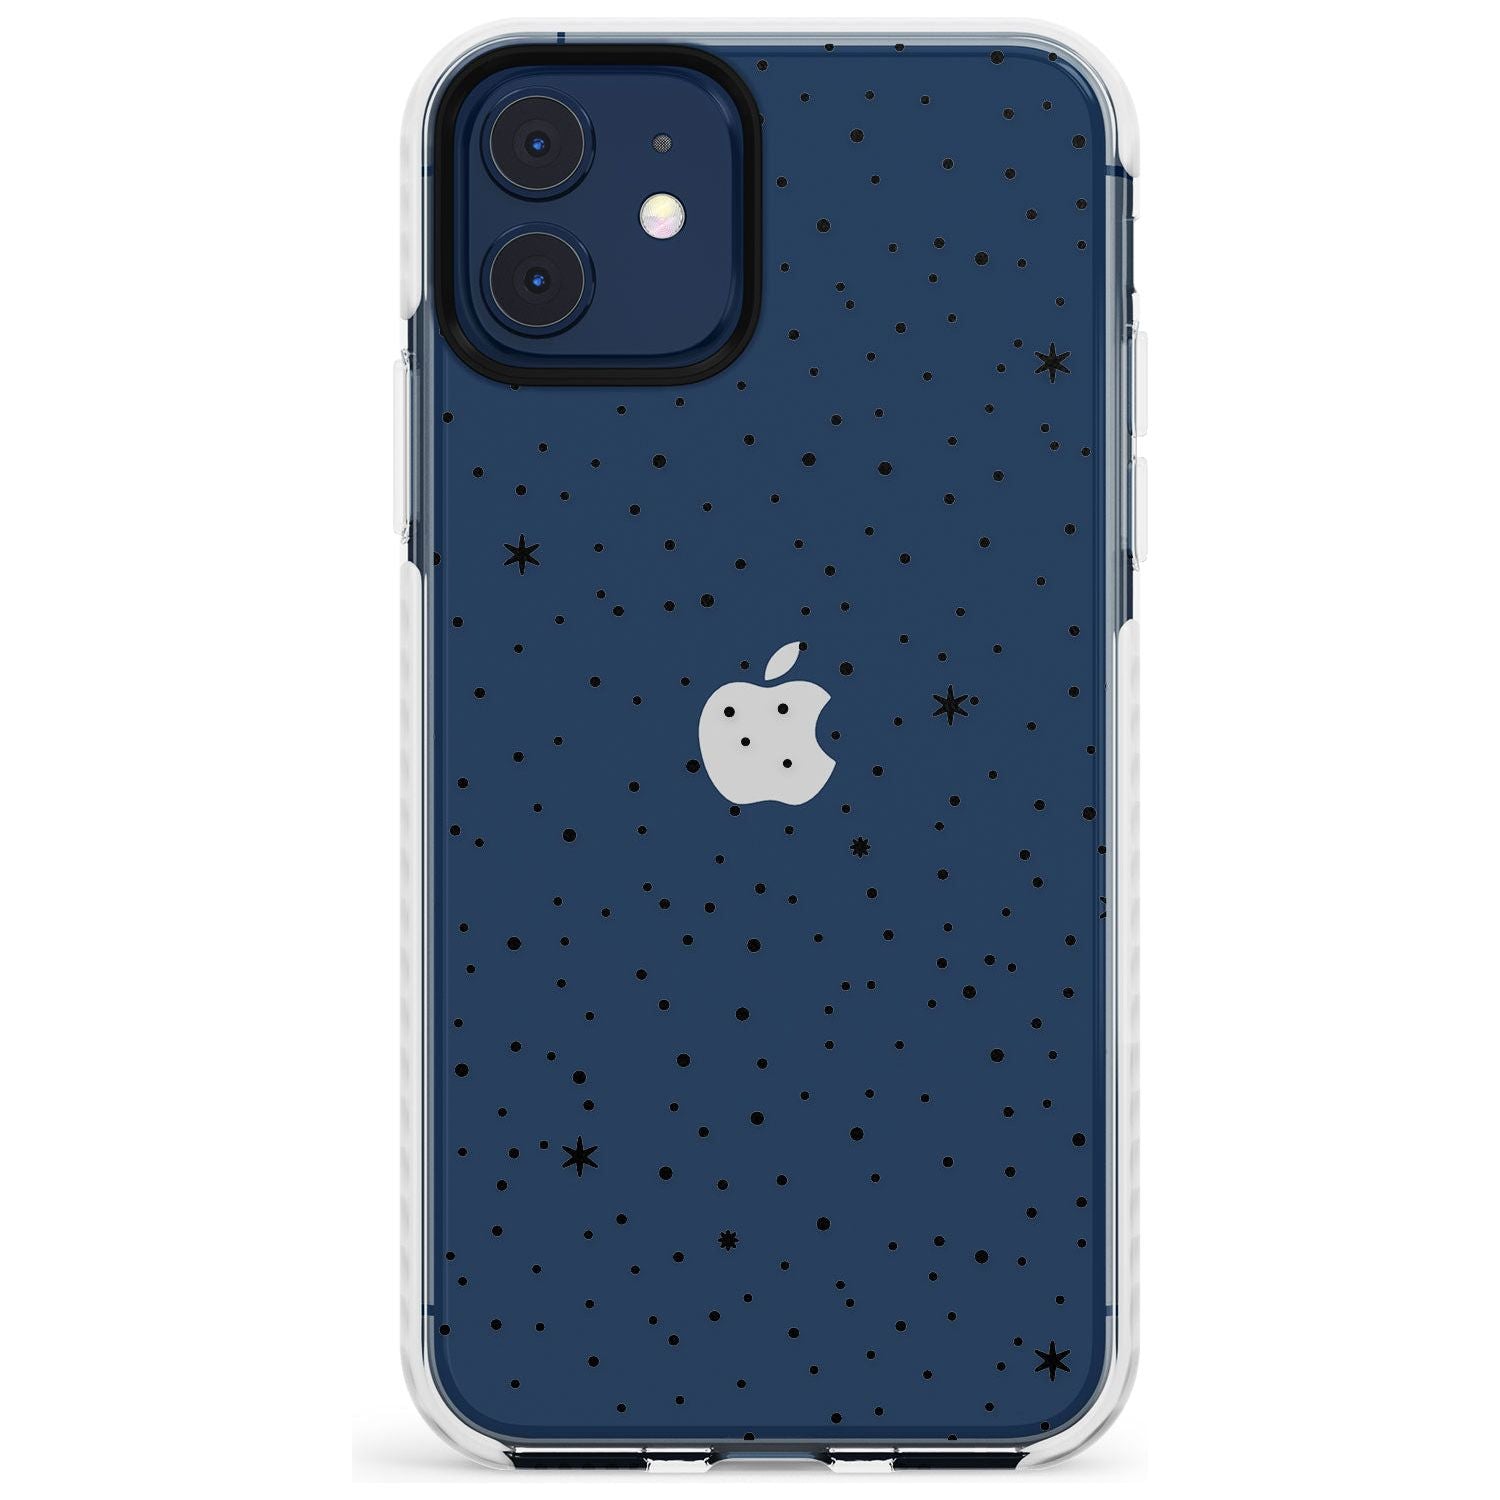 Celestial Starry Sky Slim TPU Phone Case for iPhone 11